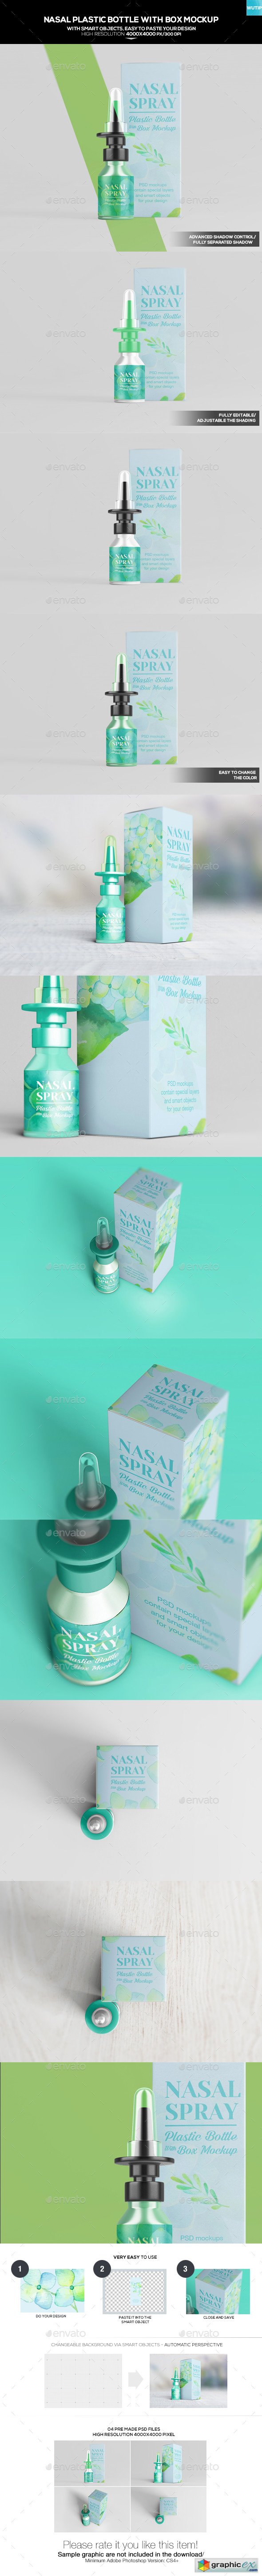 Nasal Plastic Bottle With Box Mockup